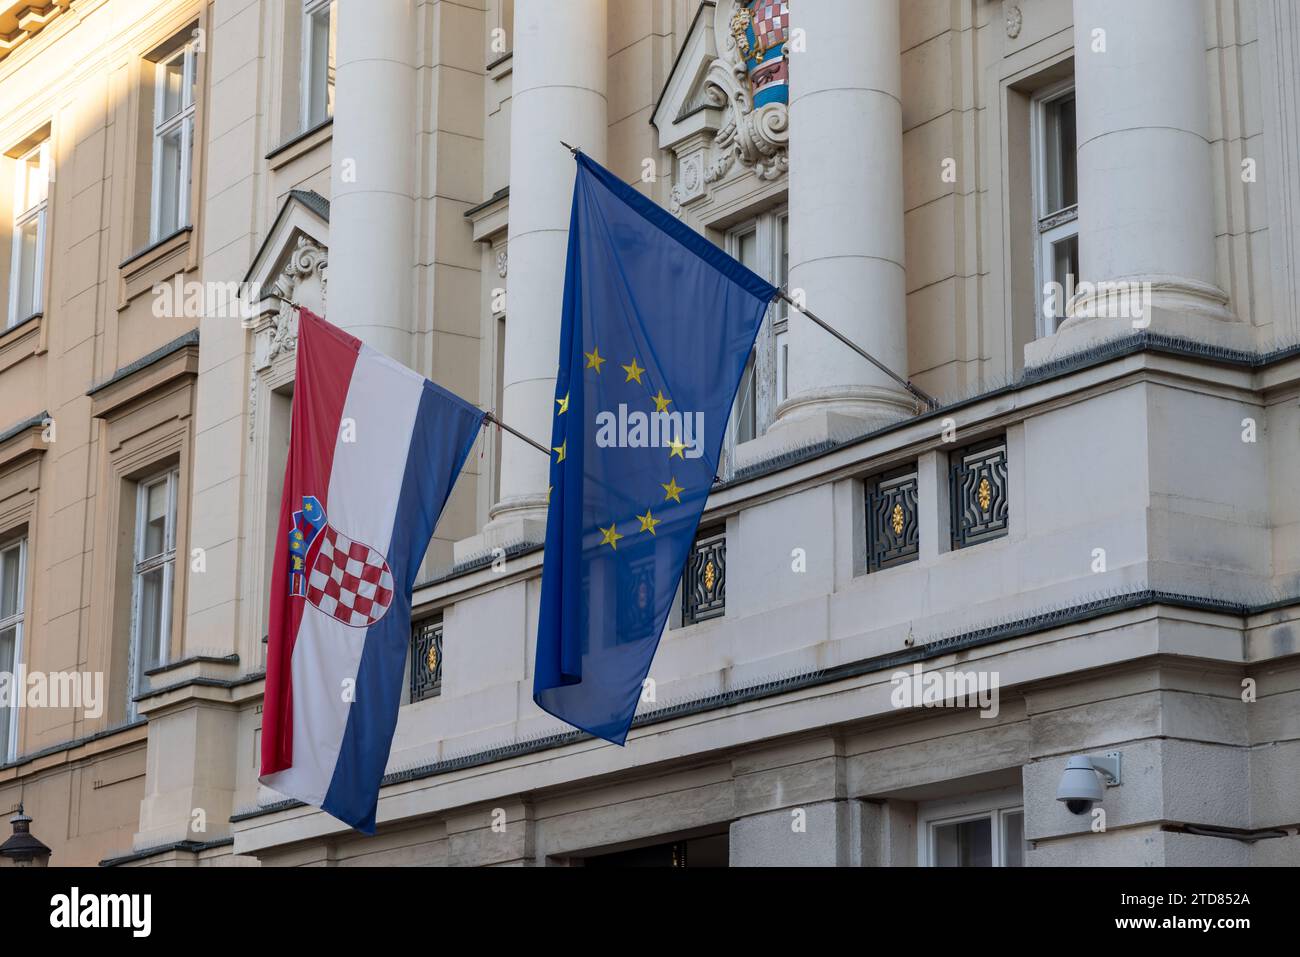 Croatian flag and European flag (flag of the European Union) on a building in Zagreb, Croatia Stock Photo